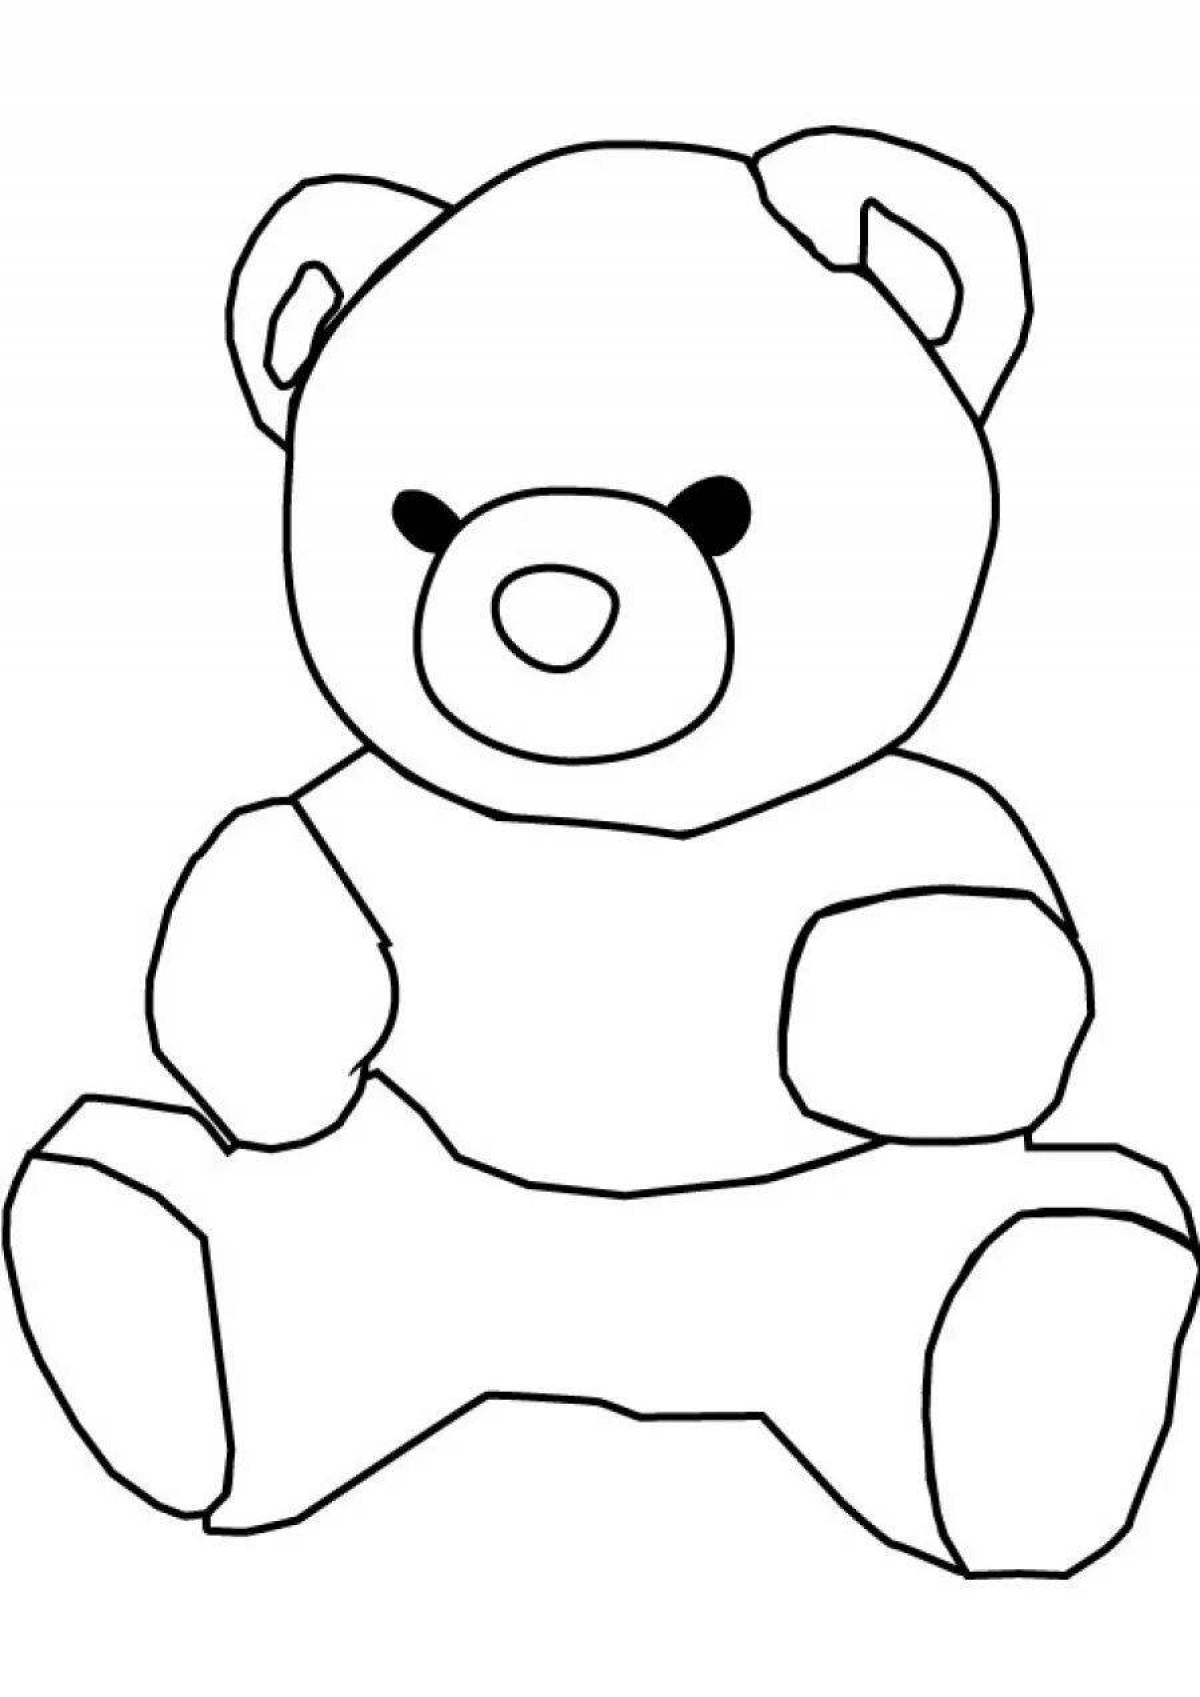 Playful teddy bear pattern for kids